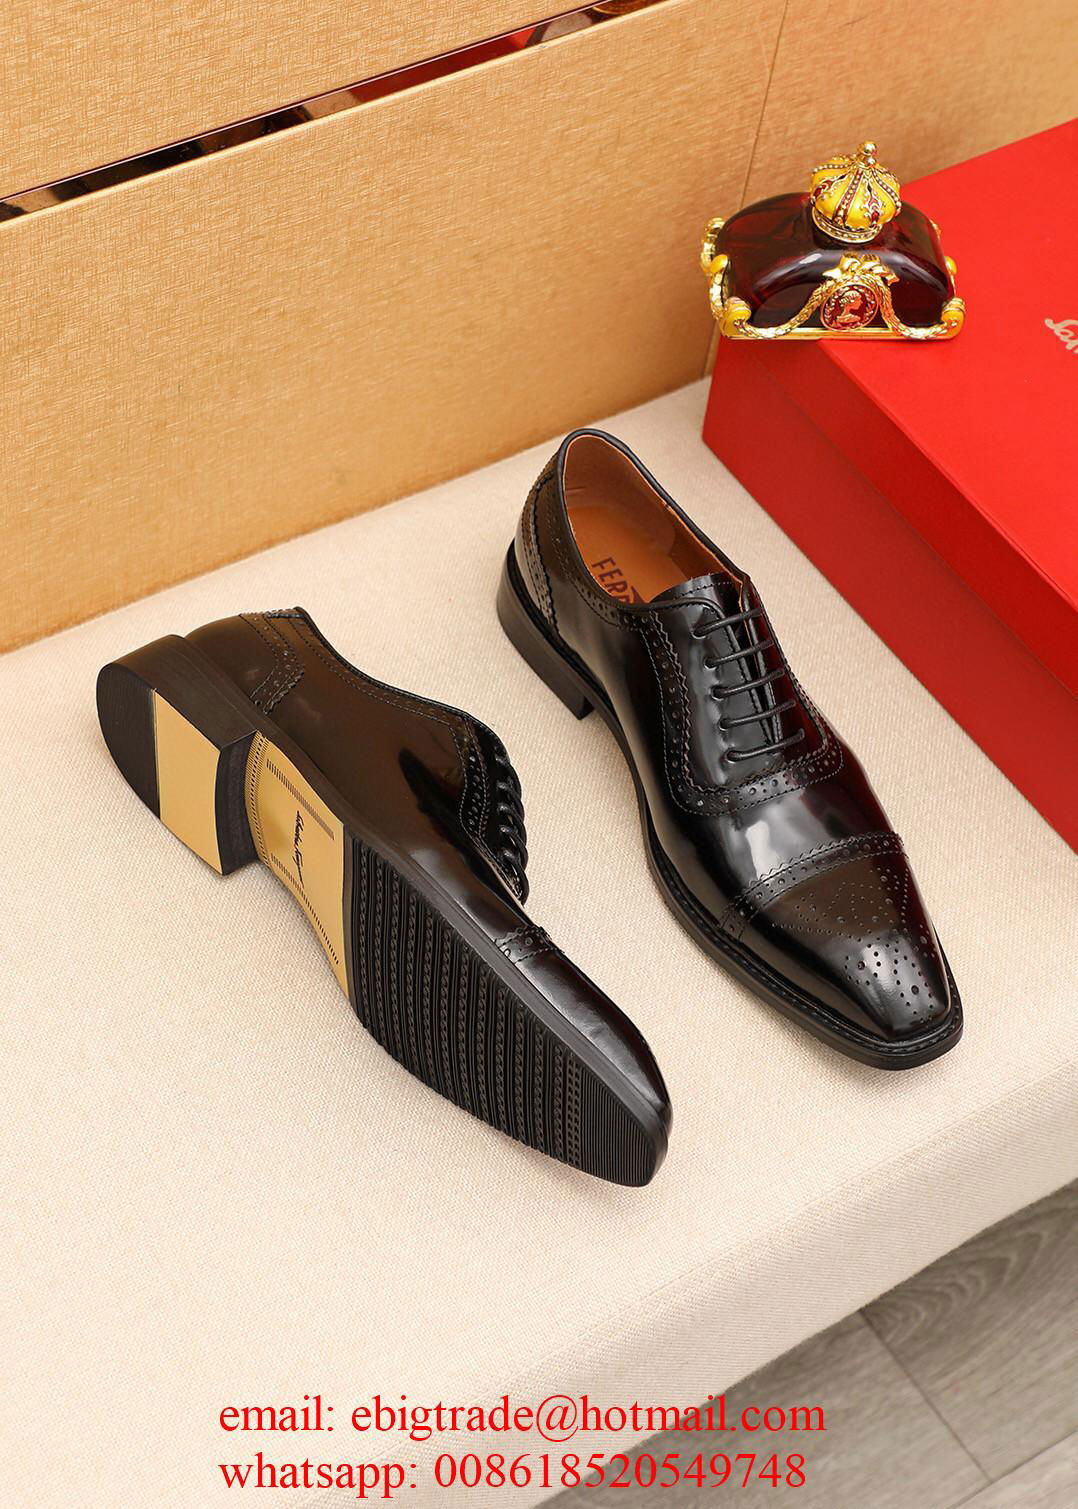 Wholesaler Salvatore           Dress Shoes Men           Leather shoes Price 4